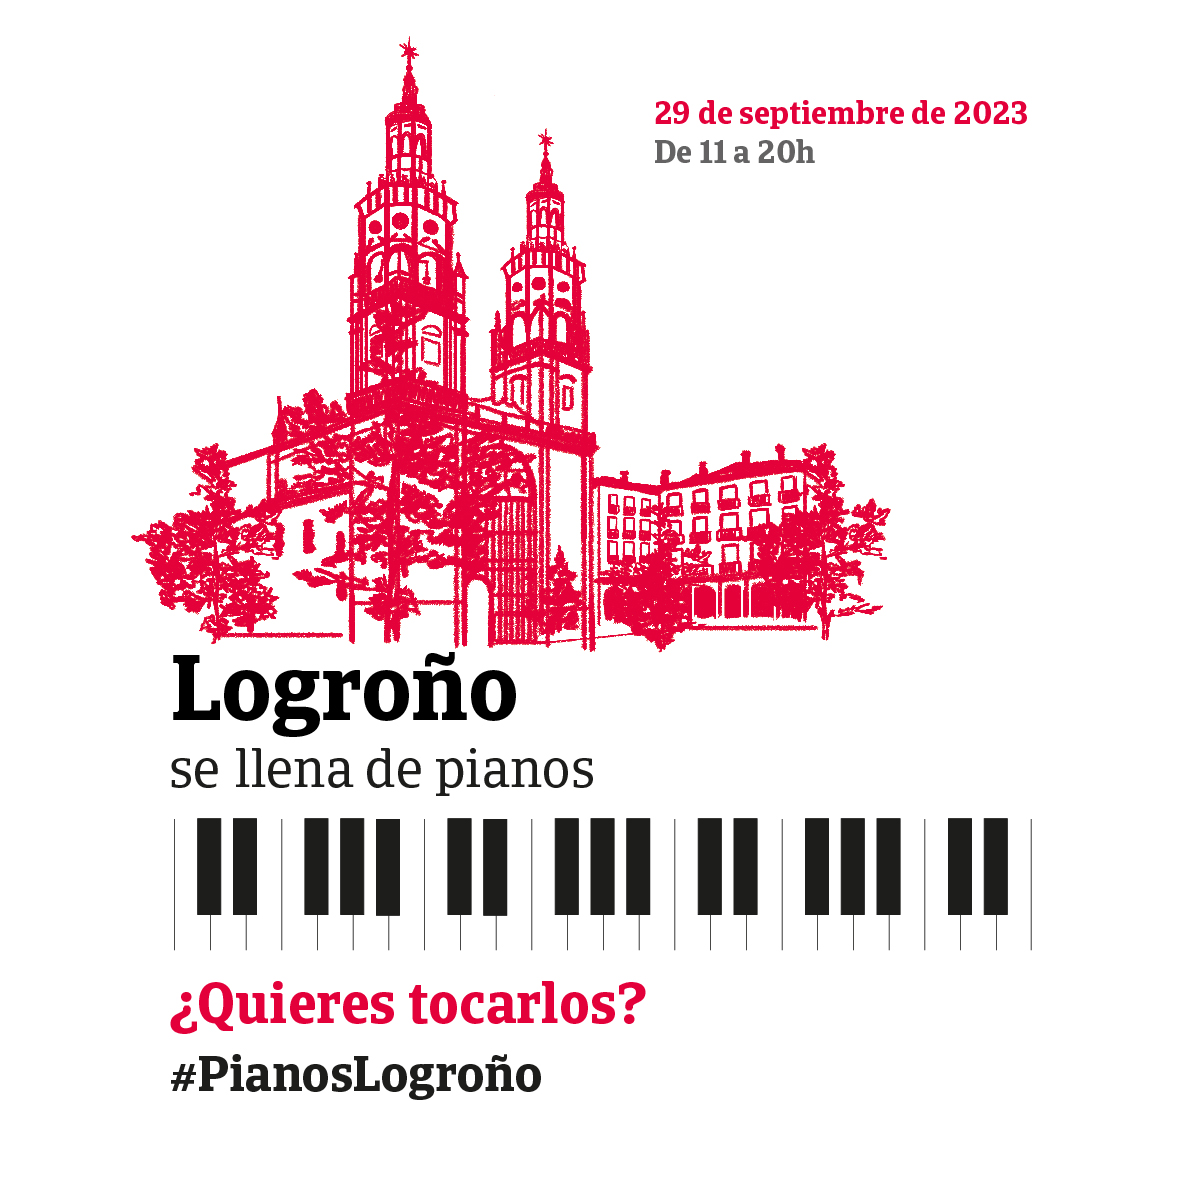 Pianos Logroño